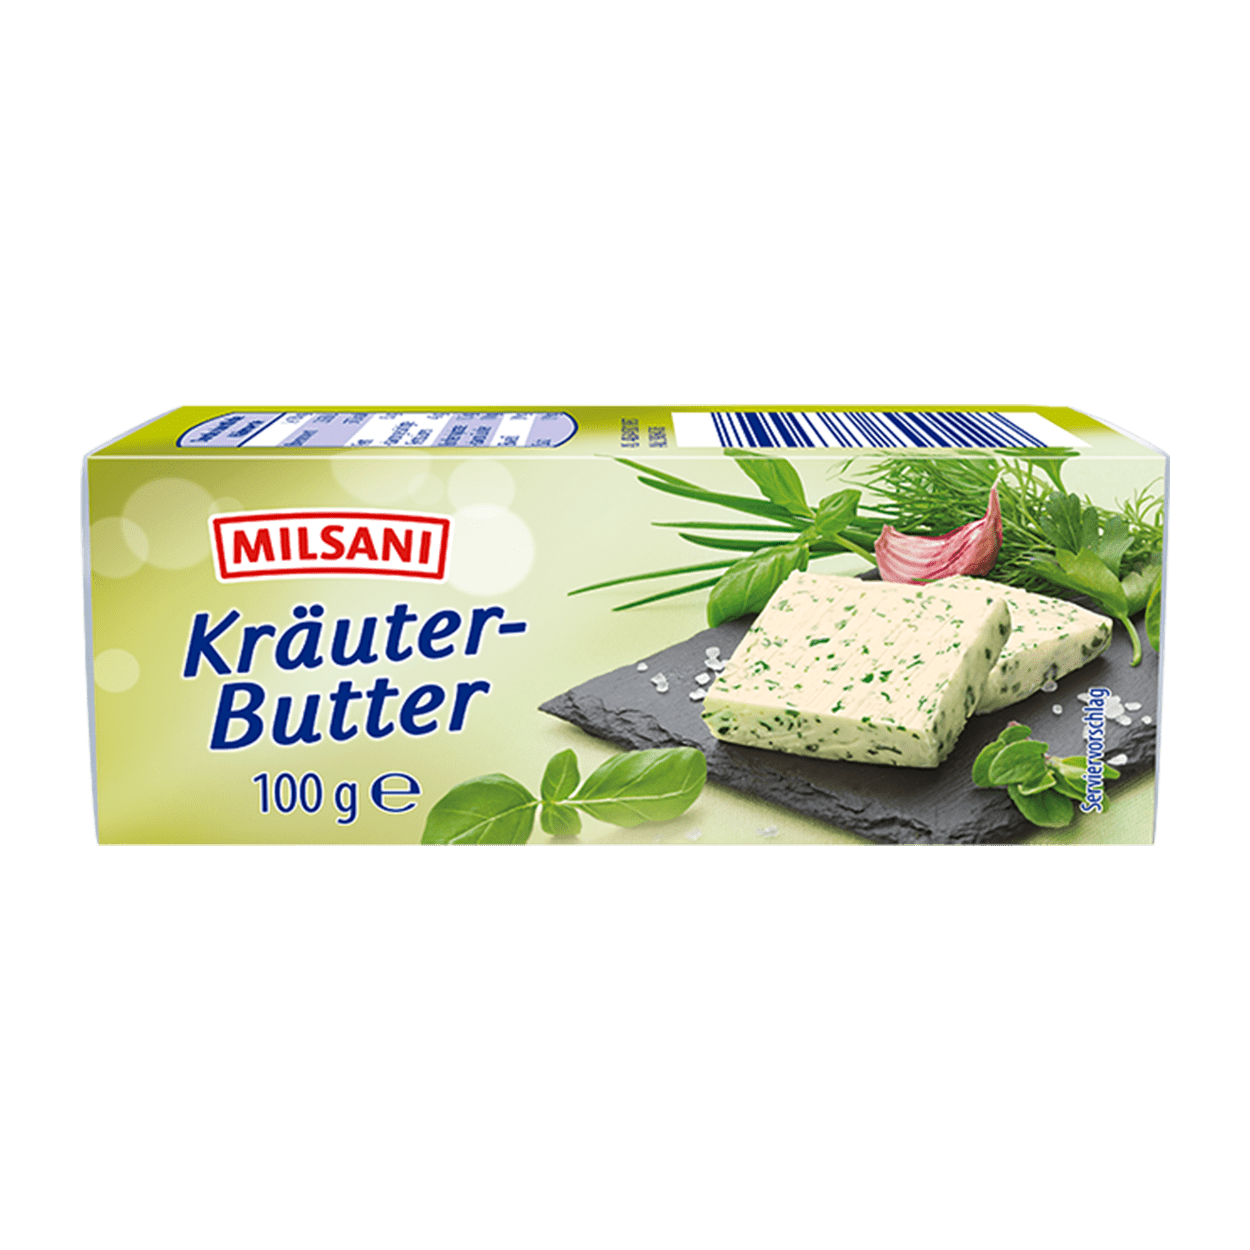 MILSANI Kräuter- / Knoblauch-Butter günstig bei ALDI Nord